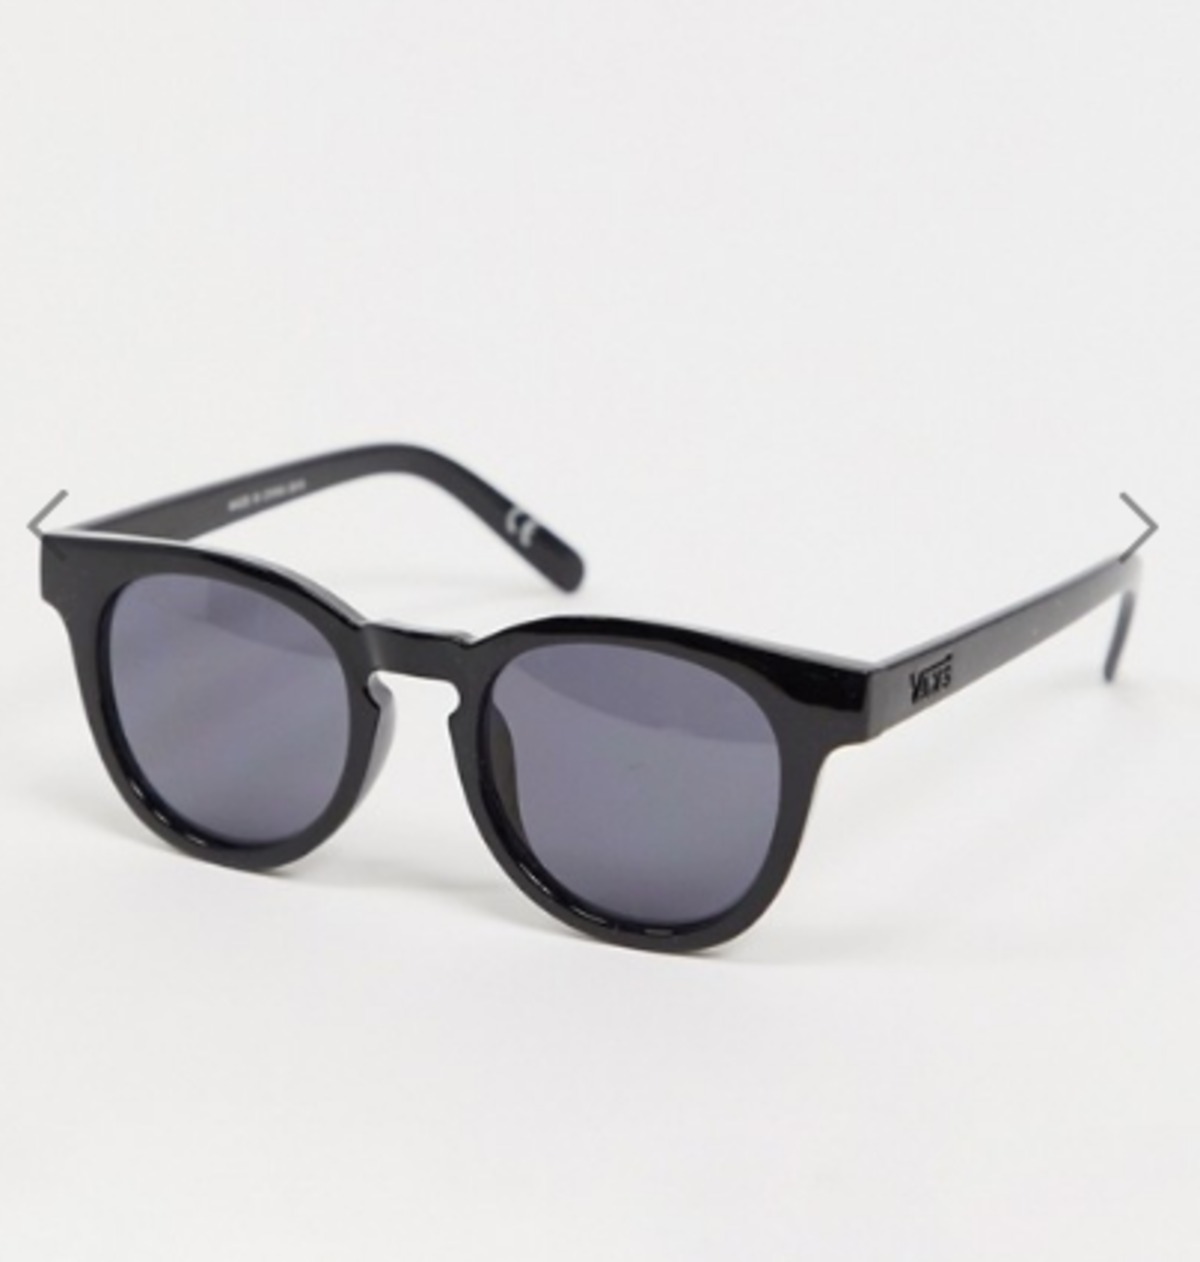 Vans】サングラス Wellborn II sunglasses in black | Just Holiday